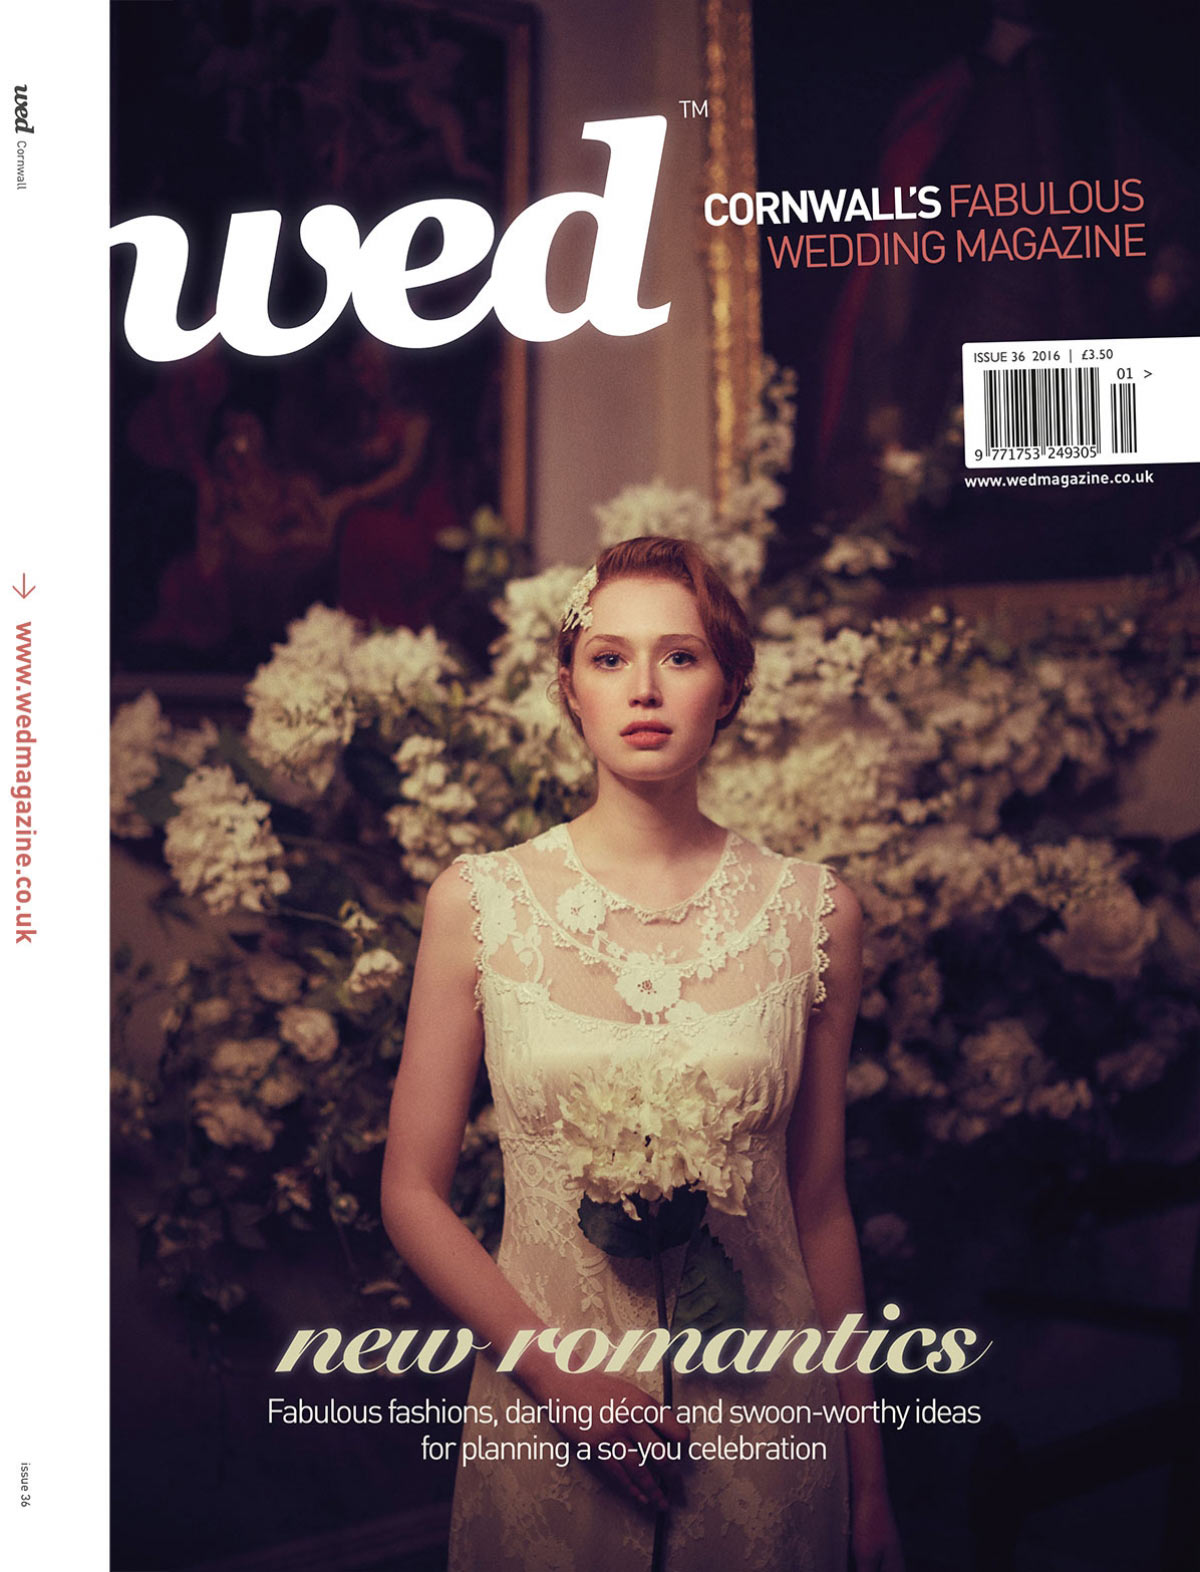 Cornwall Wed Magazine - Issue 36